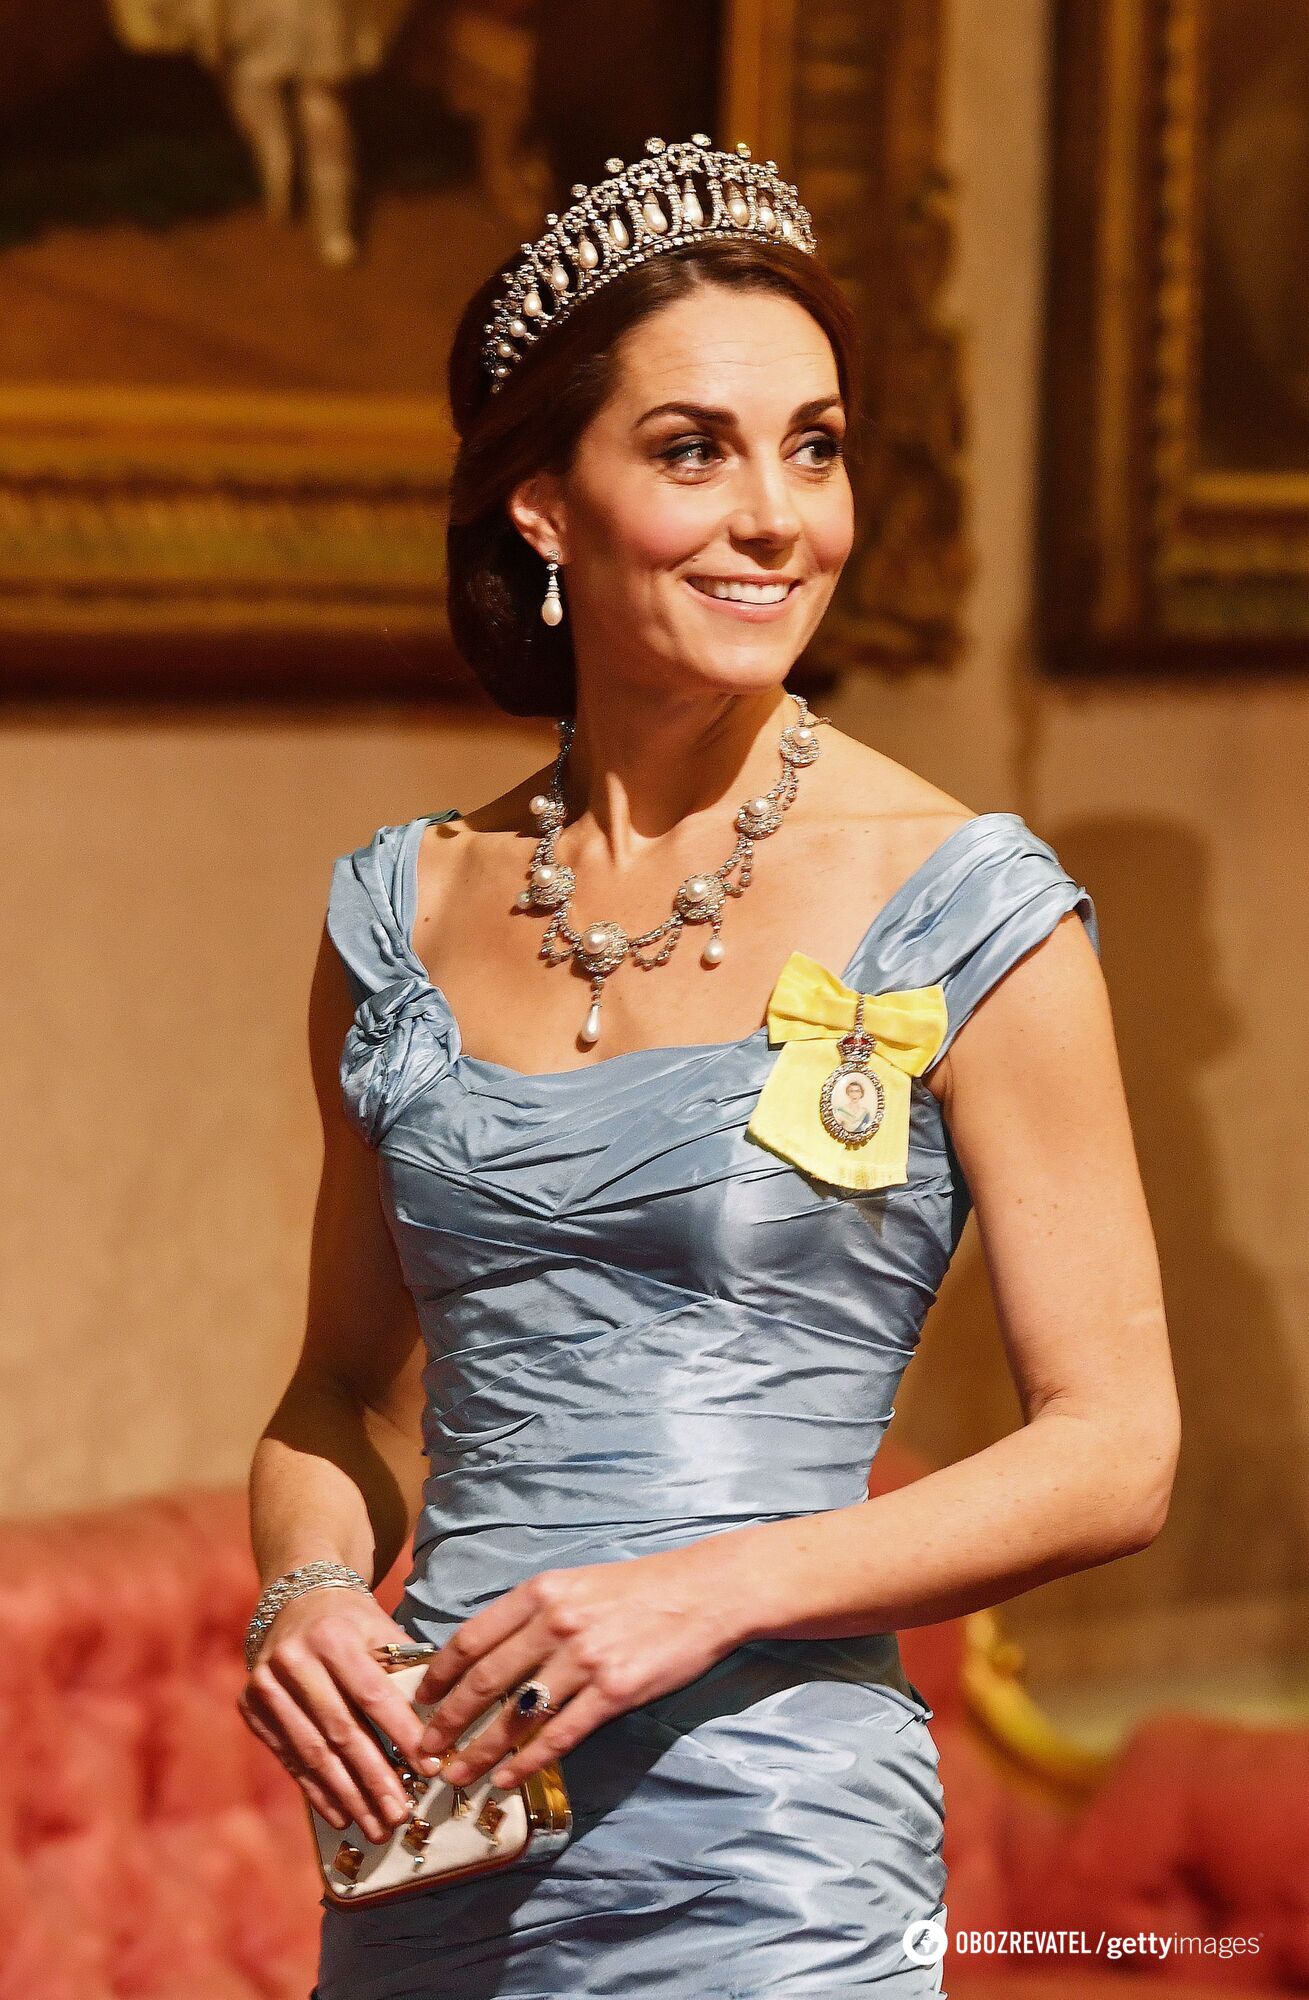 Свадебное ожерелье королевы Александры на Кейт Миддлтон